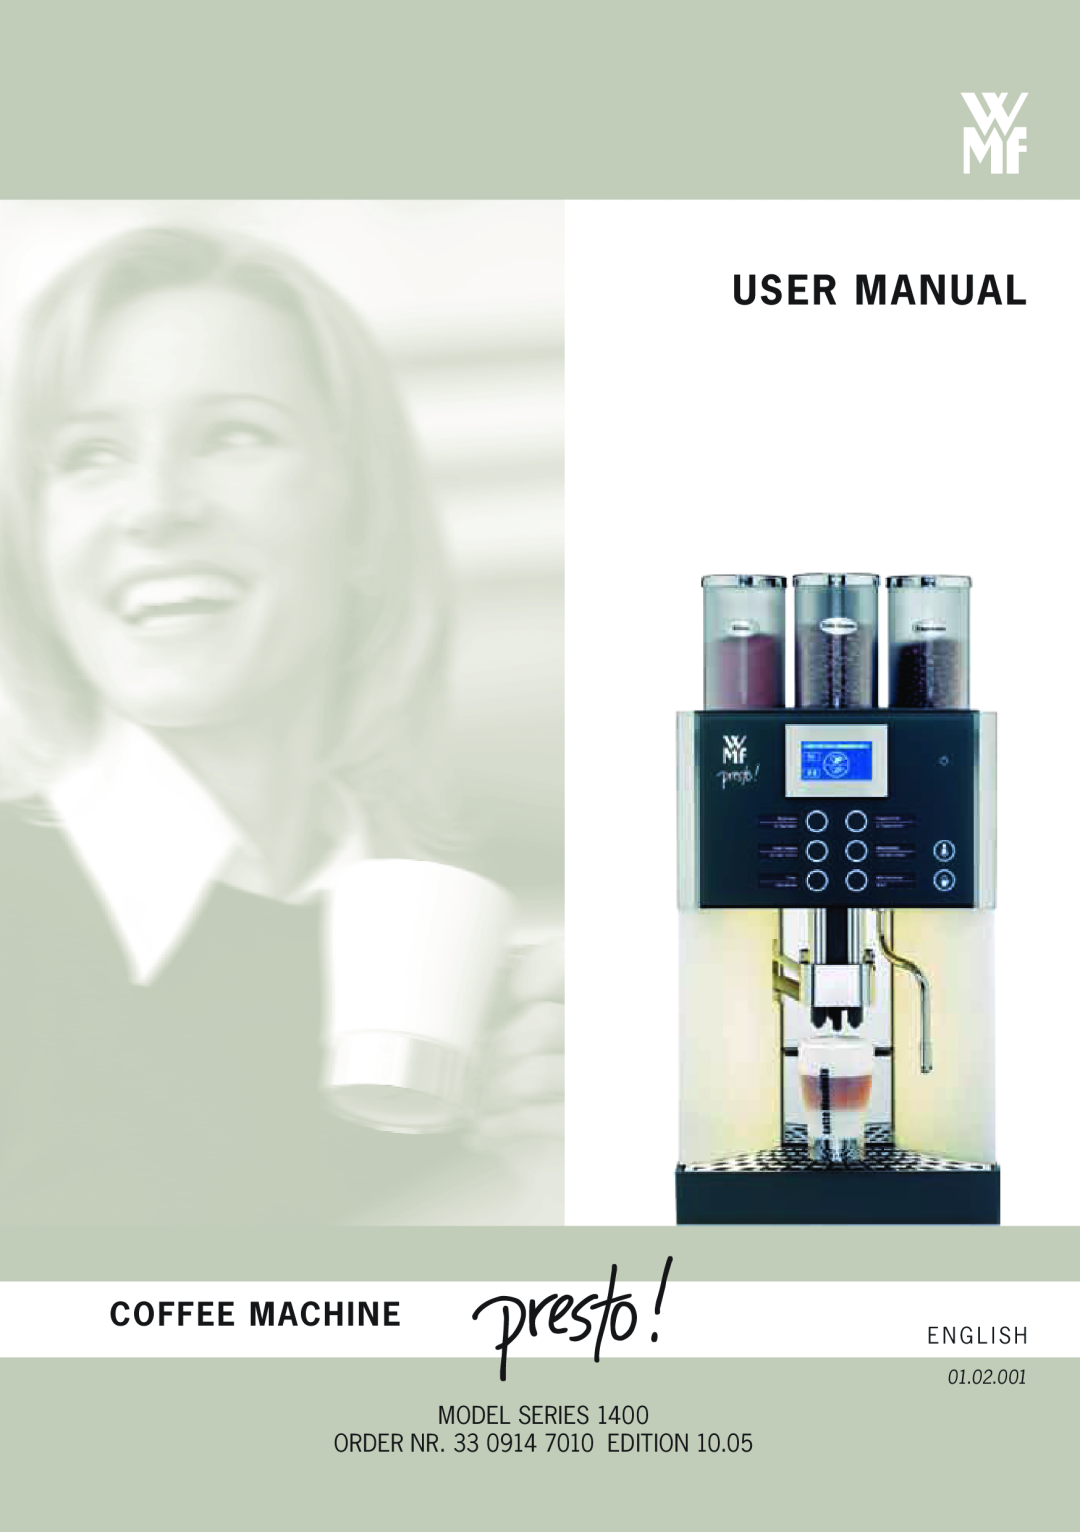 WMF Americas 1400 user manual Coffee machine, 01.02.001 